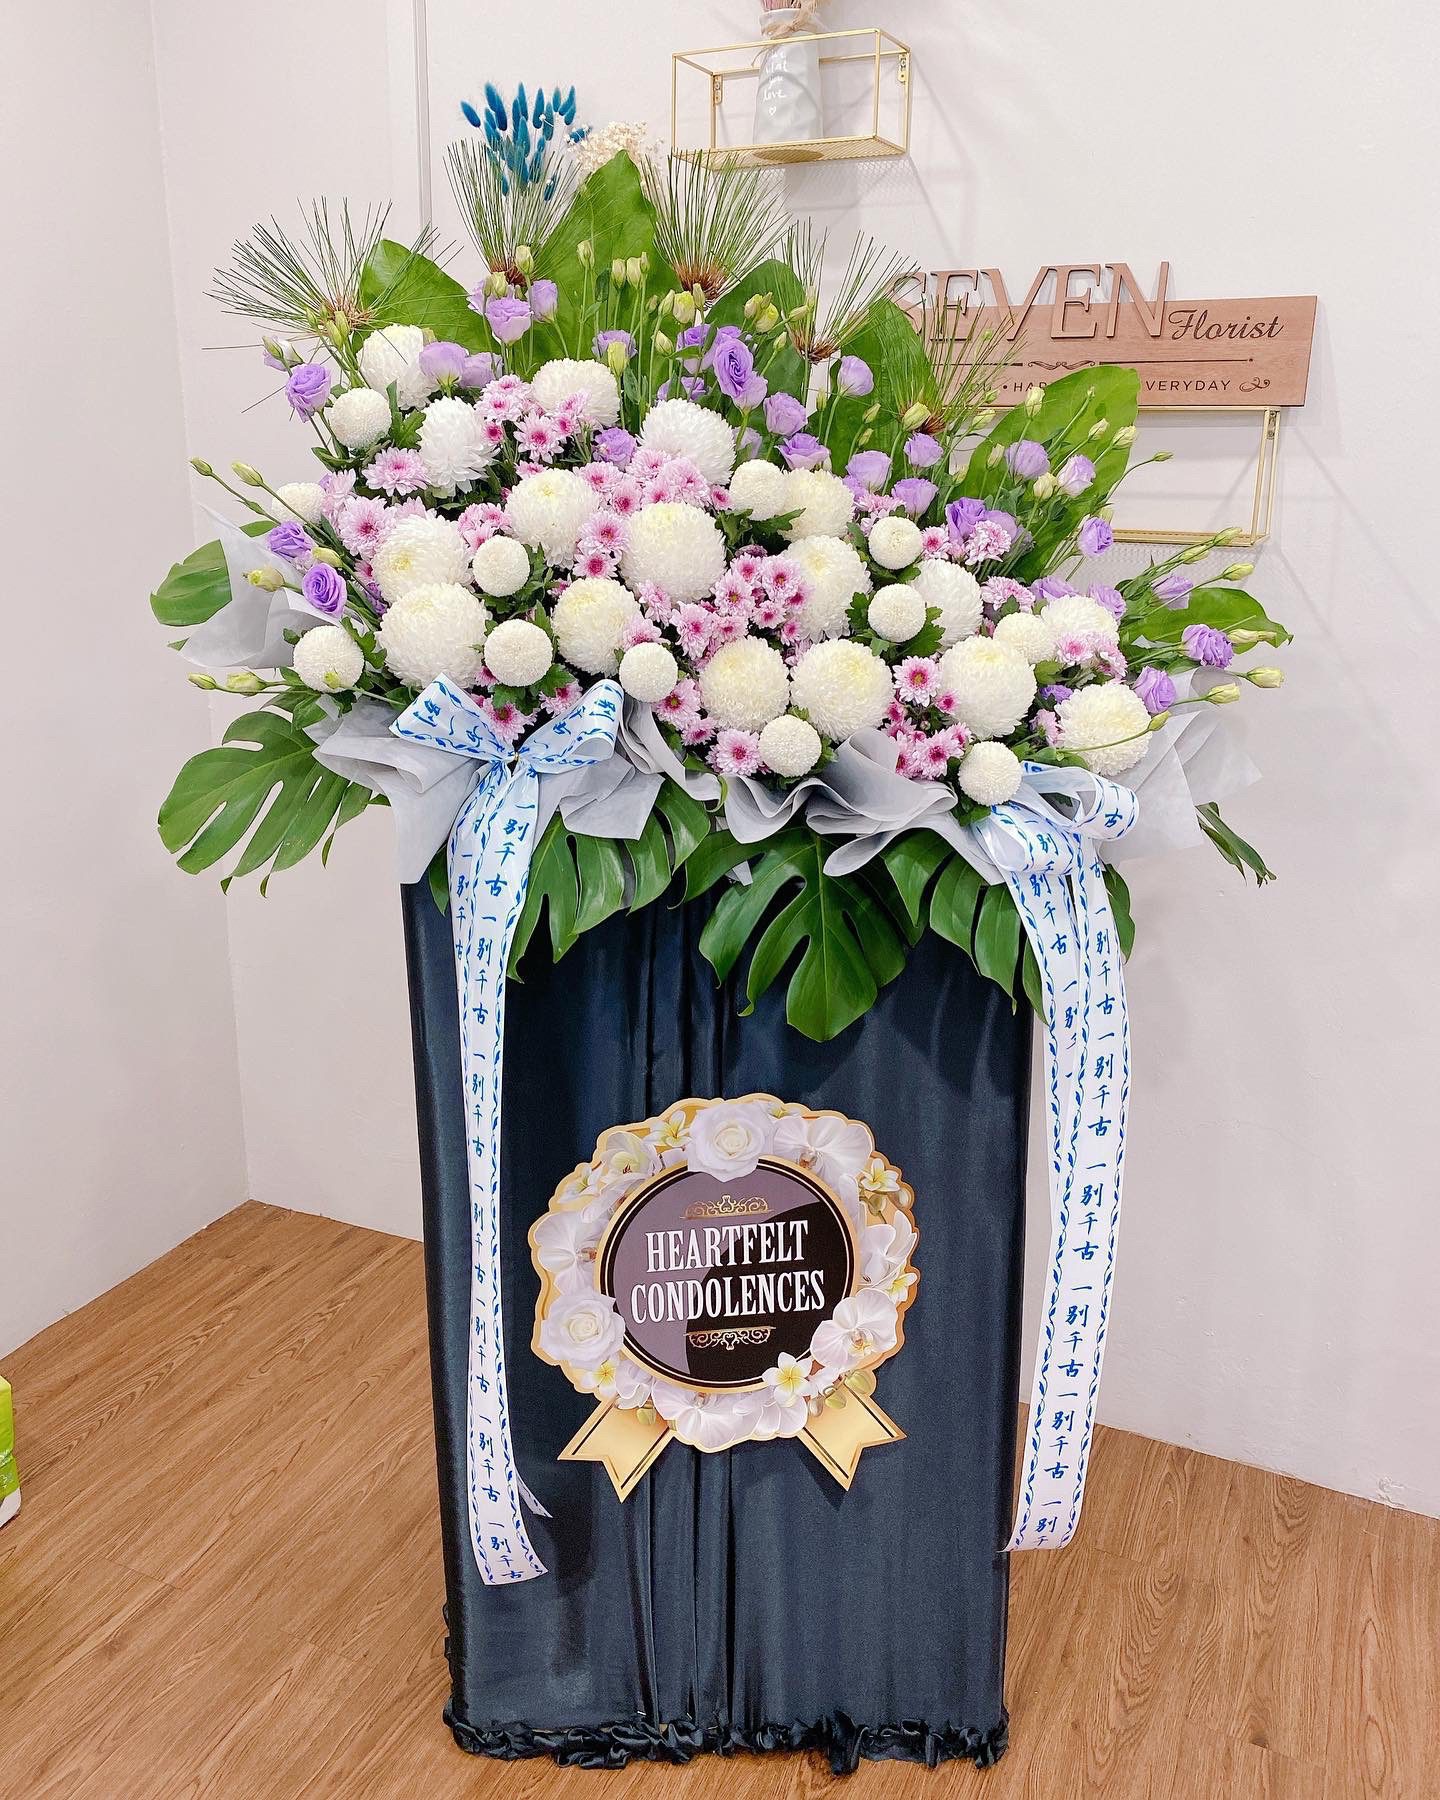 seven florist cherish condolences flower